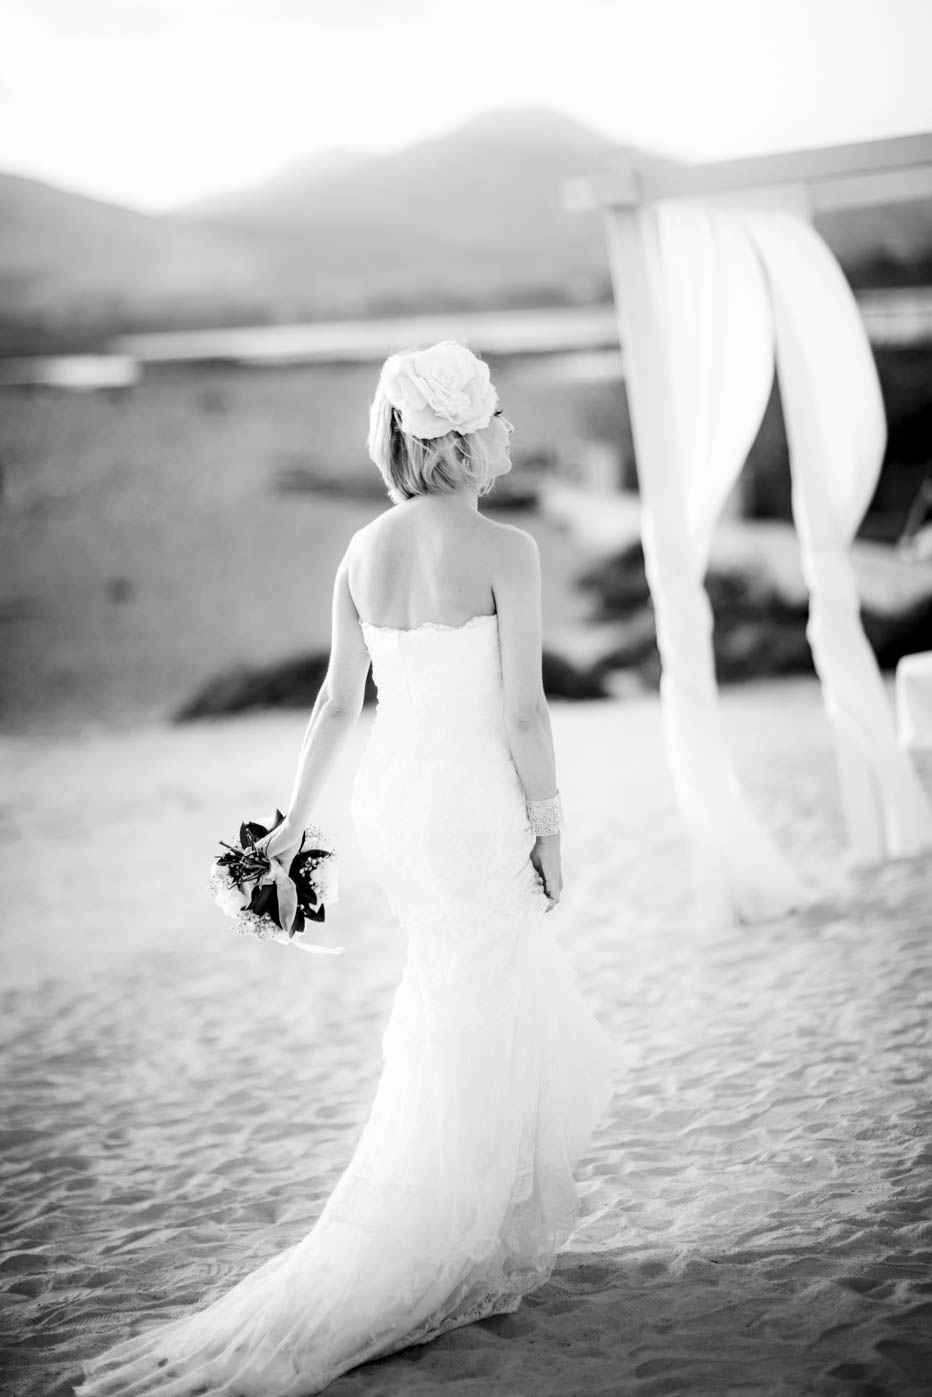 Claire & Nathan - Gypsy Westwood - Ibiza Wedding Photographer